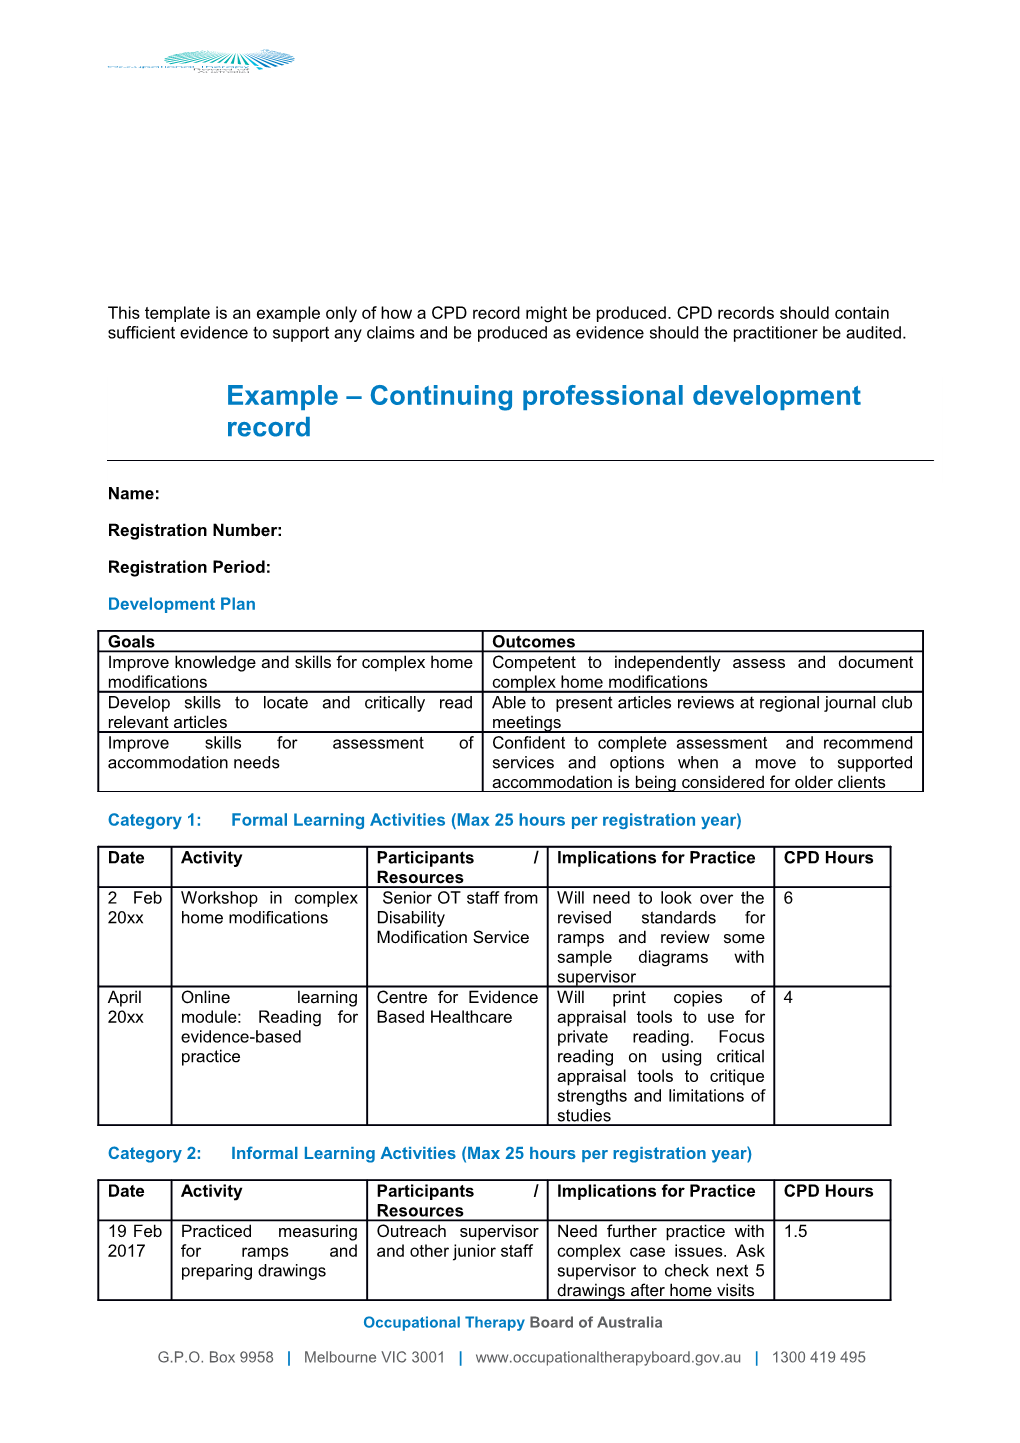 Example Continuing Professional Development Record